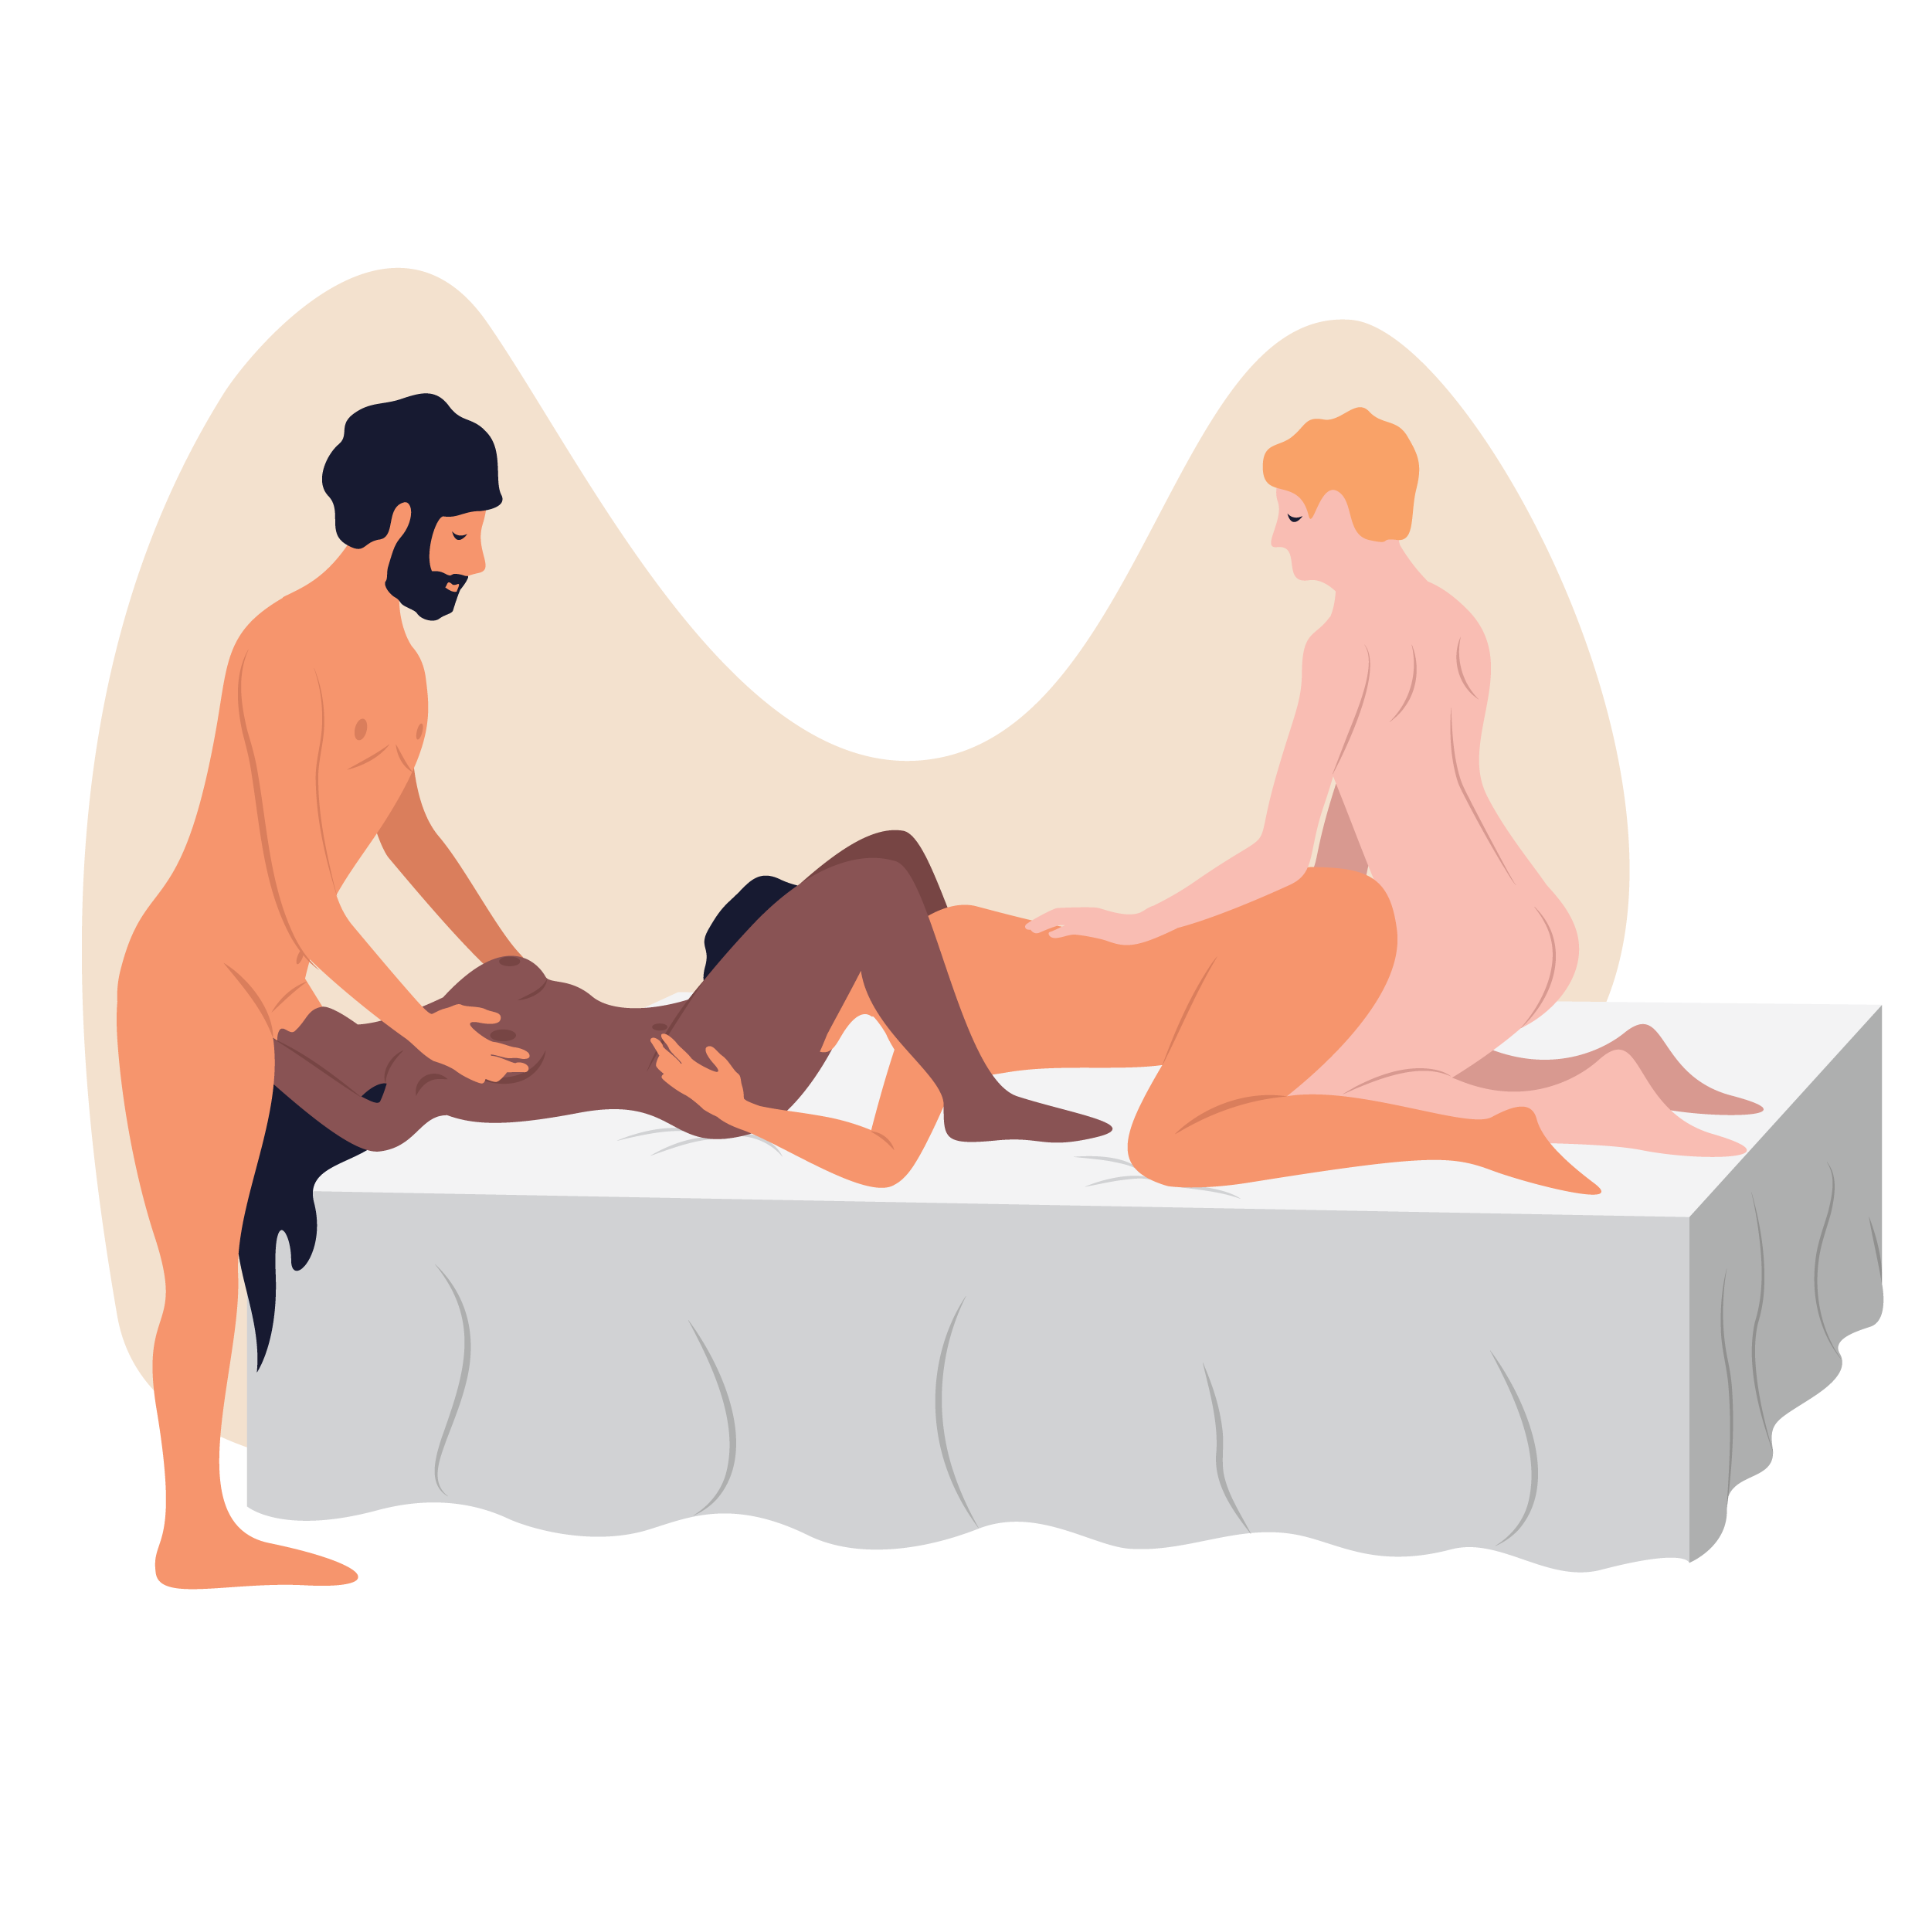 Foursome sex position